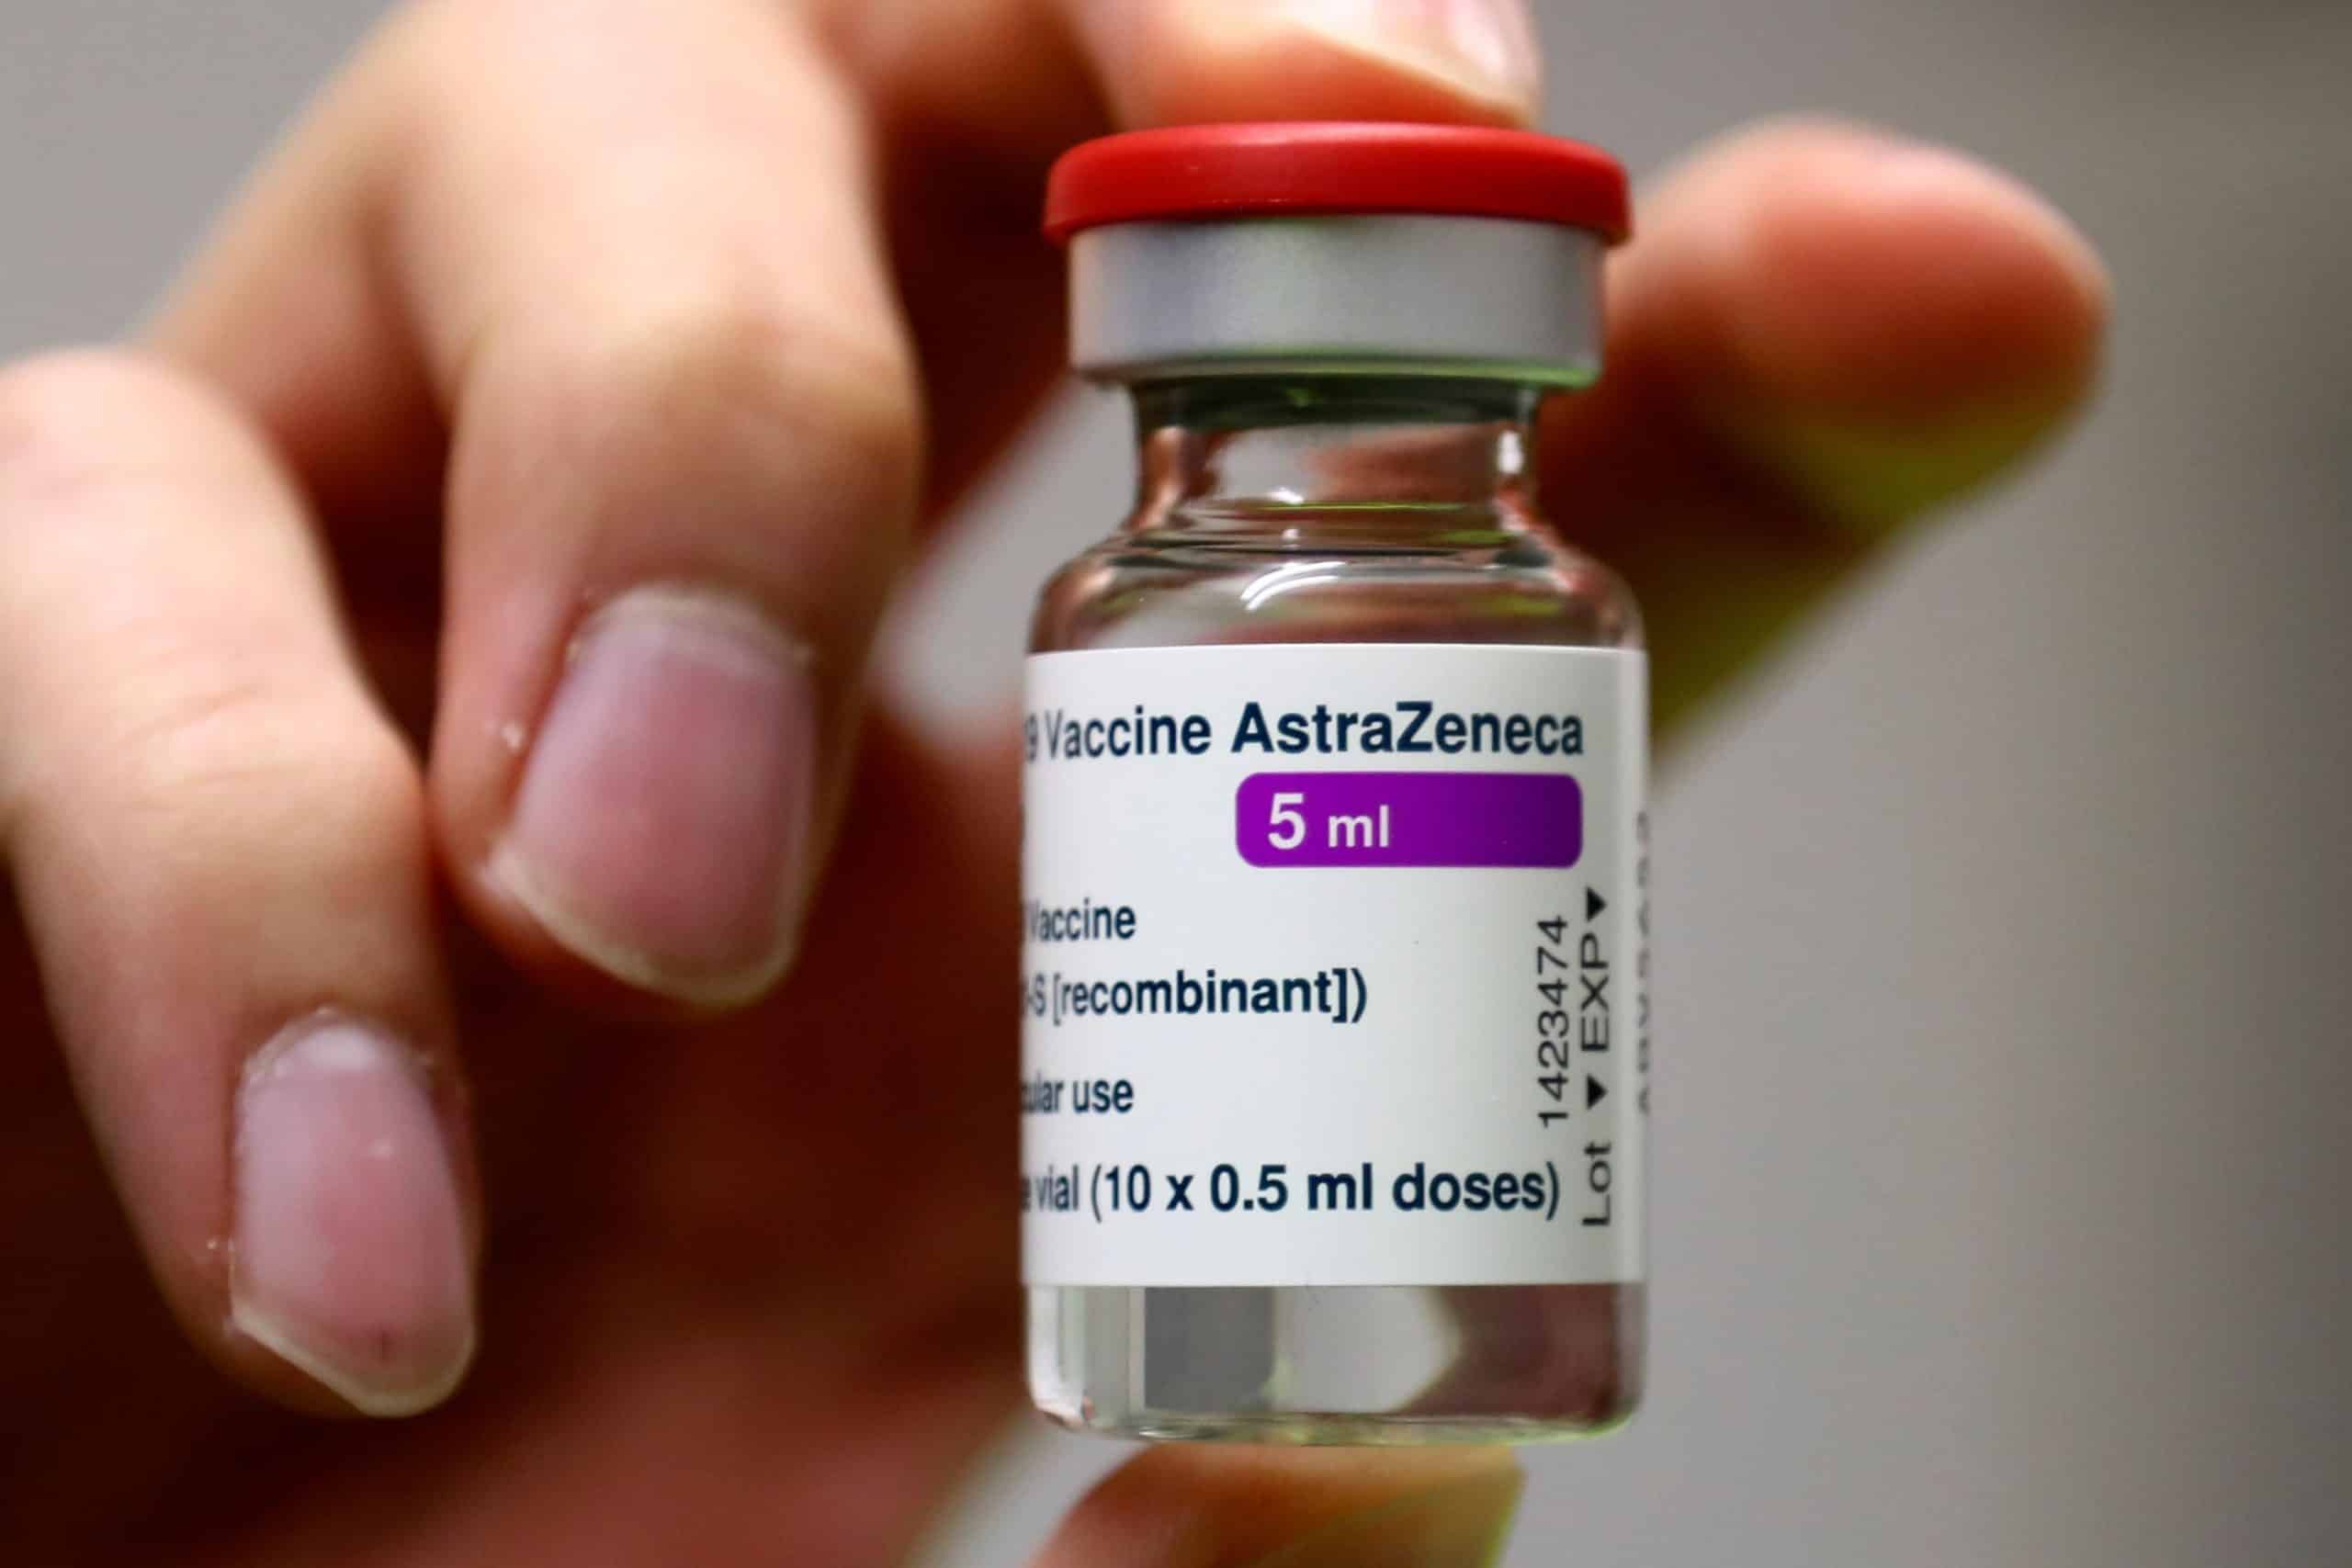 EU lashes out at AstraZeneca over ‘serious’ vaccine shortfall